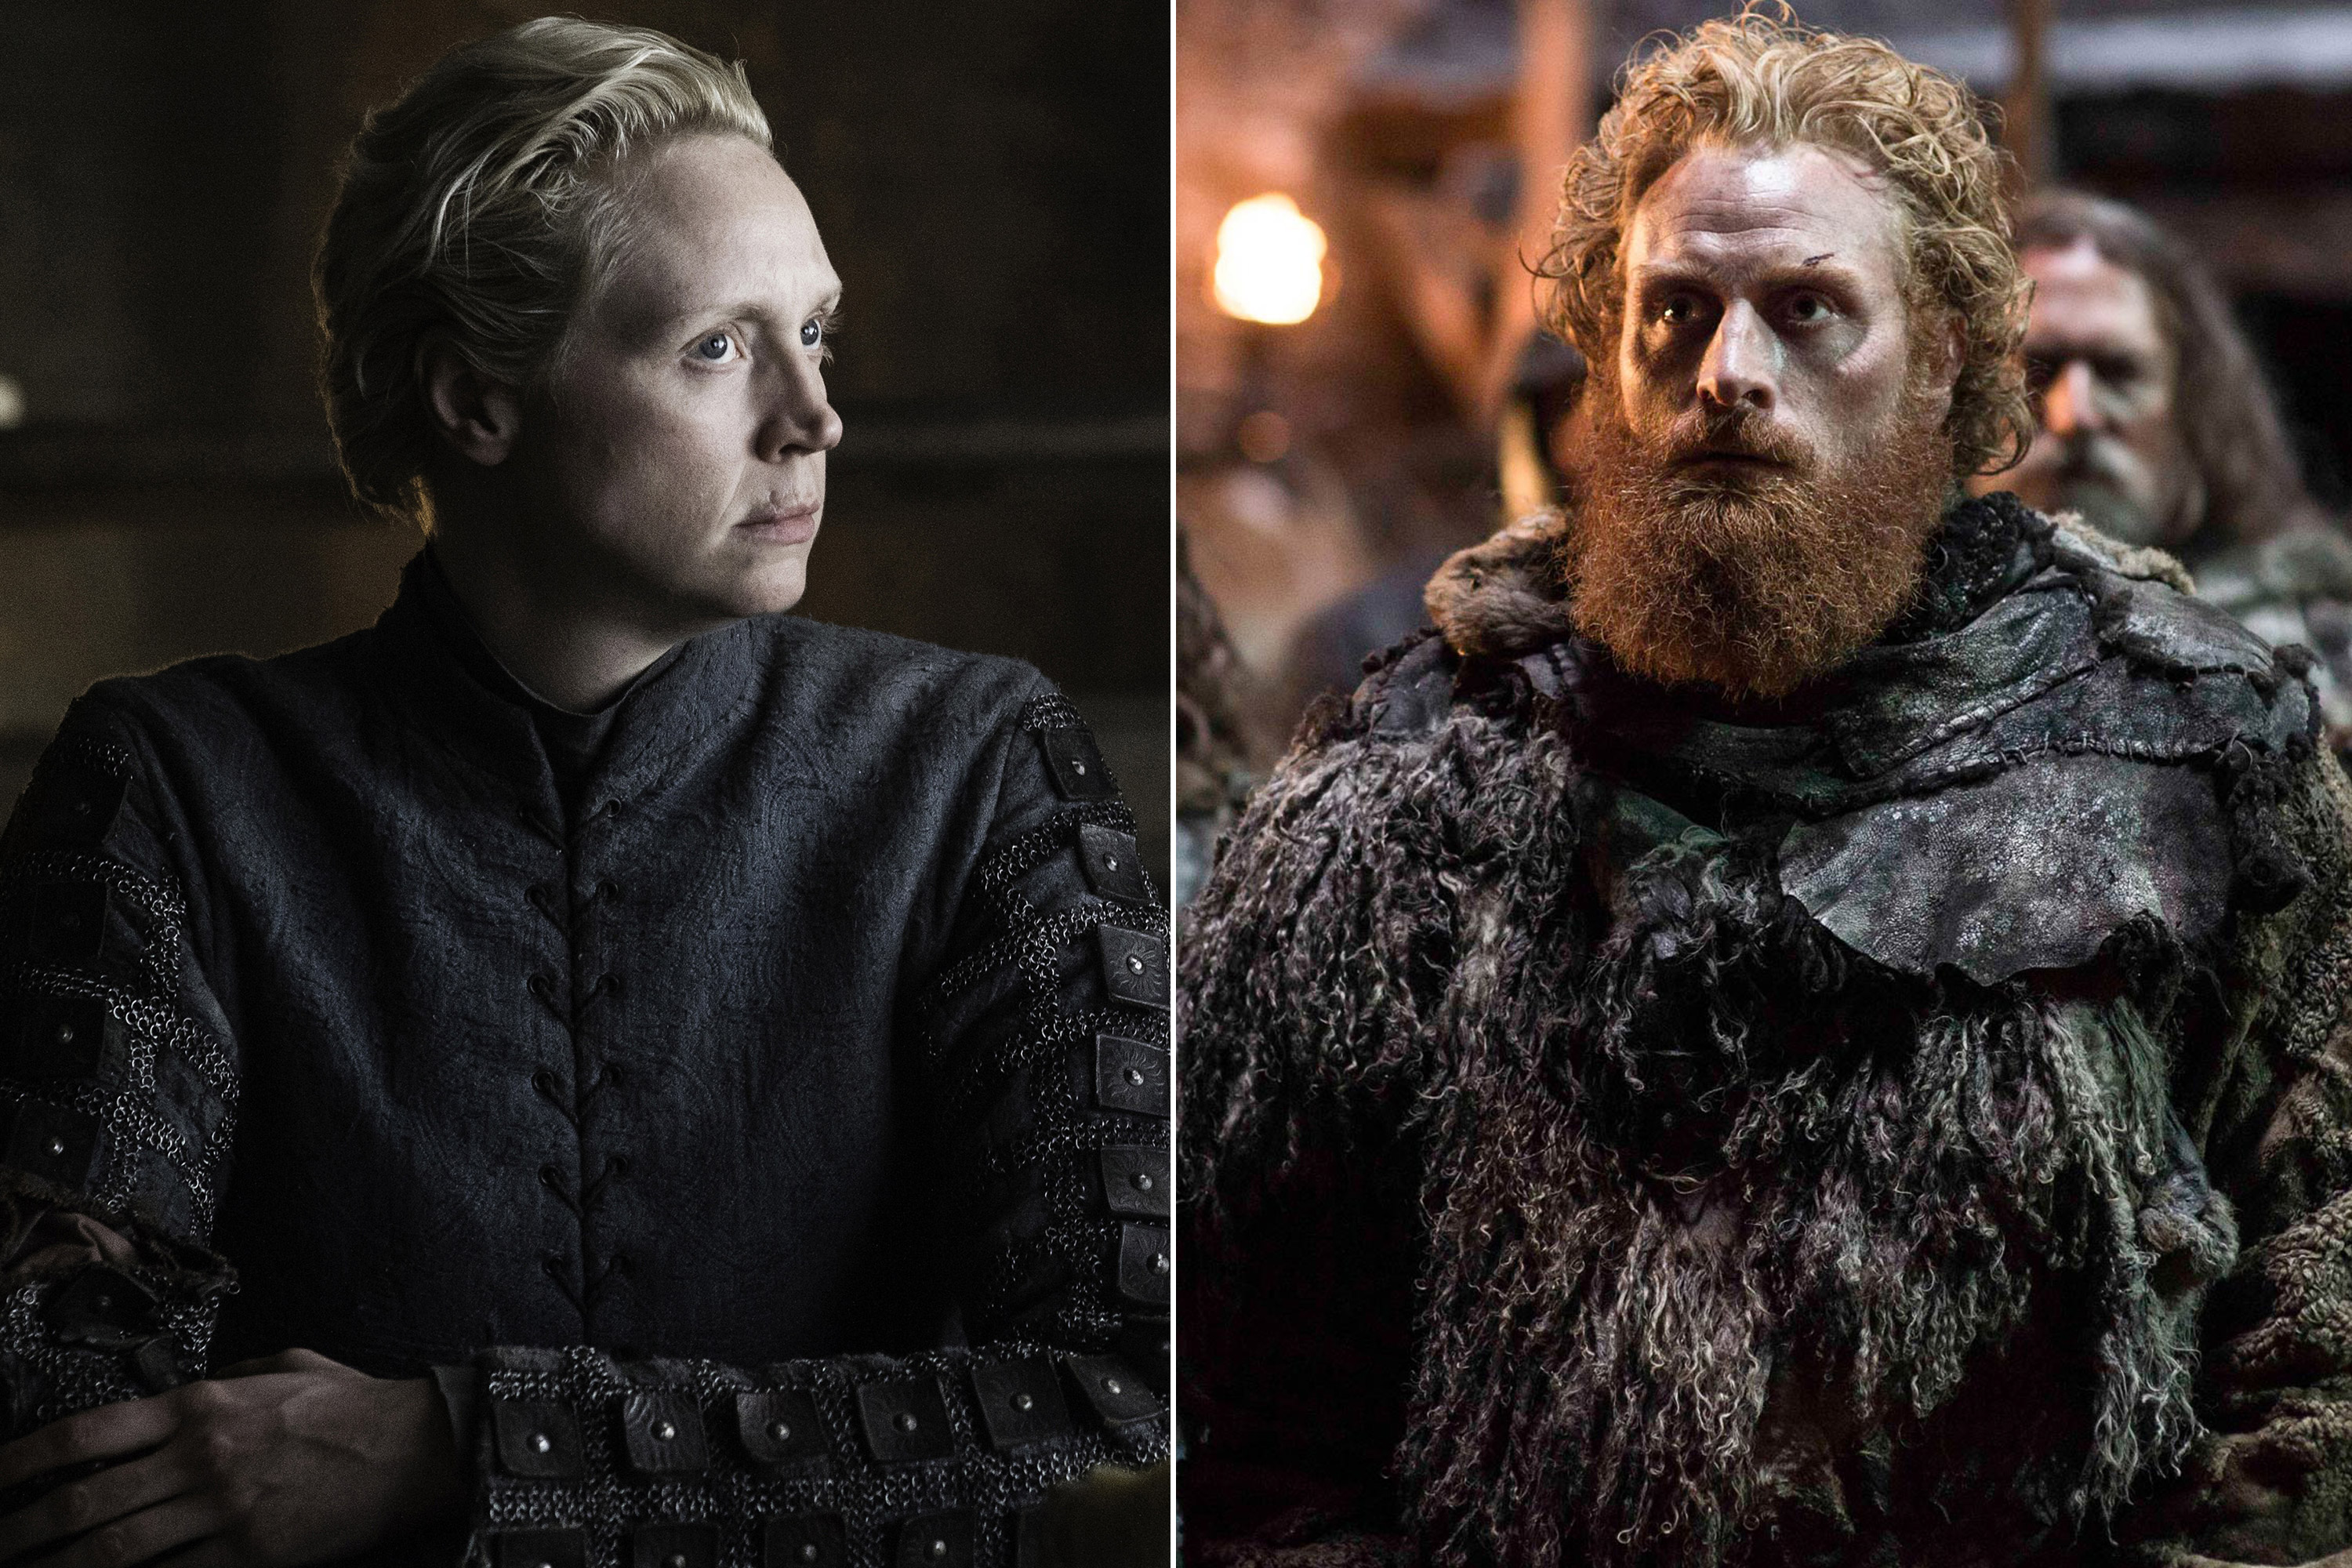 Kristofer Hivju as Tormund Giantsbane and Gwendoline Christie as Brienne of Tarth in Game of Thrones. (HBO)